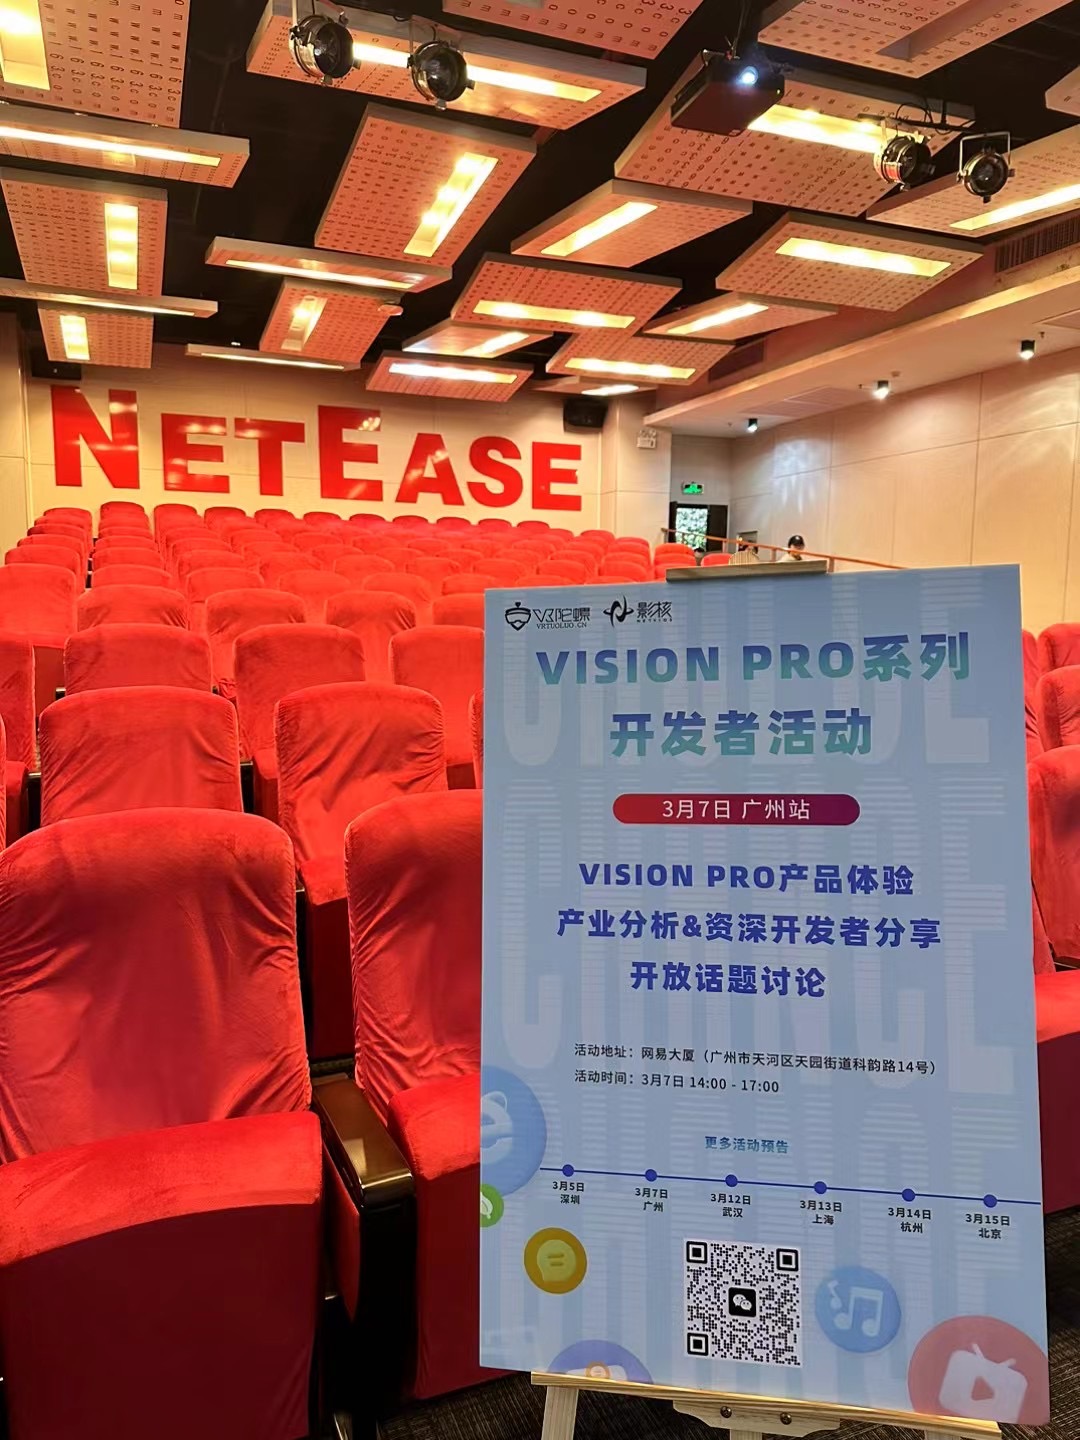 VR陀螺聯合影核探索新平臺新機遇：Vision Pro系列開發者活動•廣州站圓滿結束